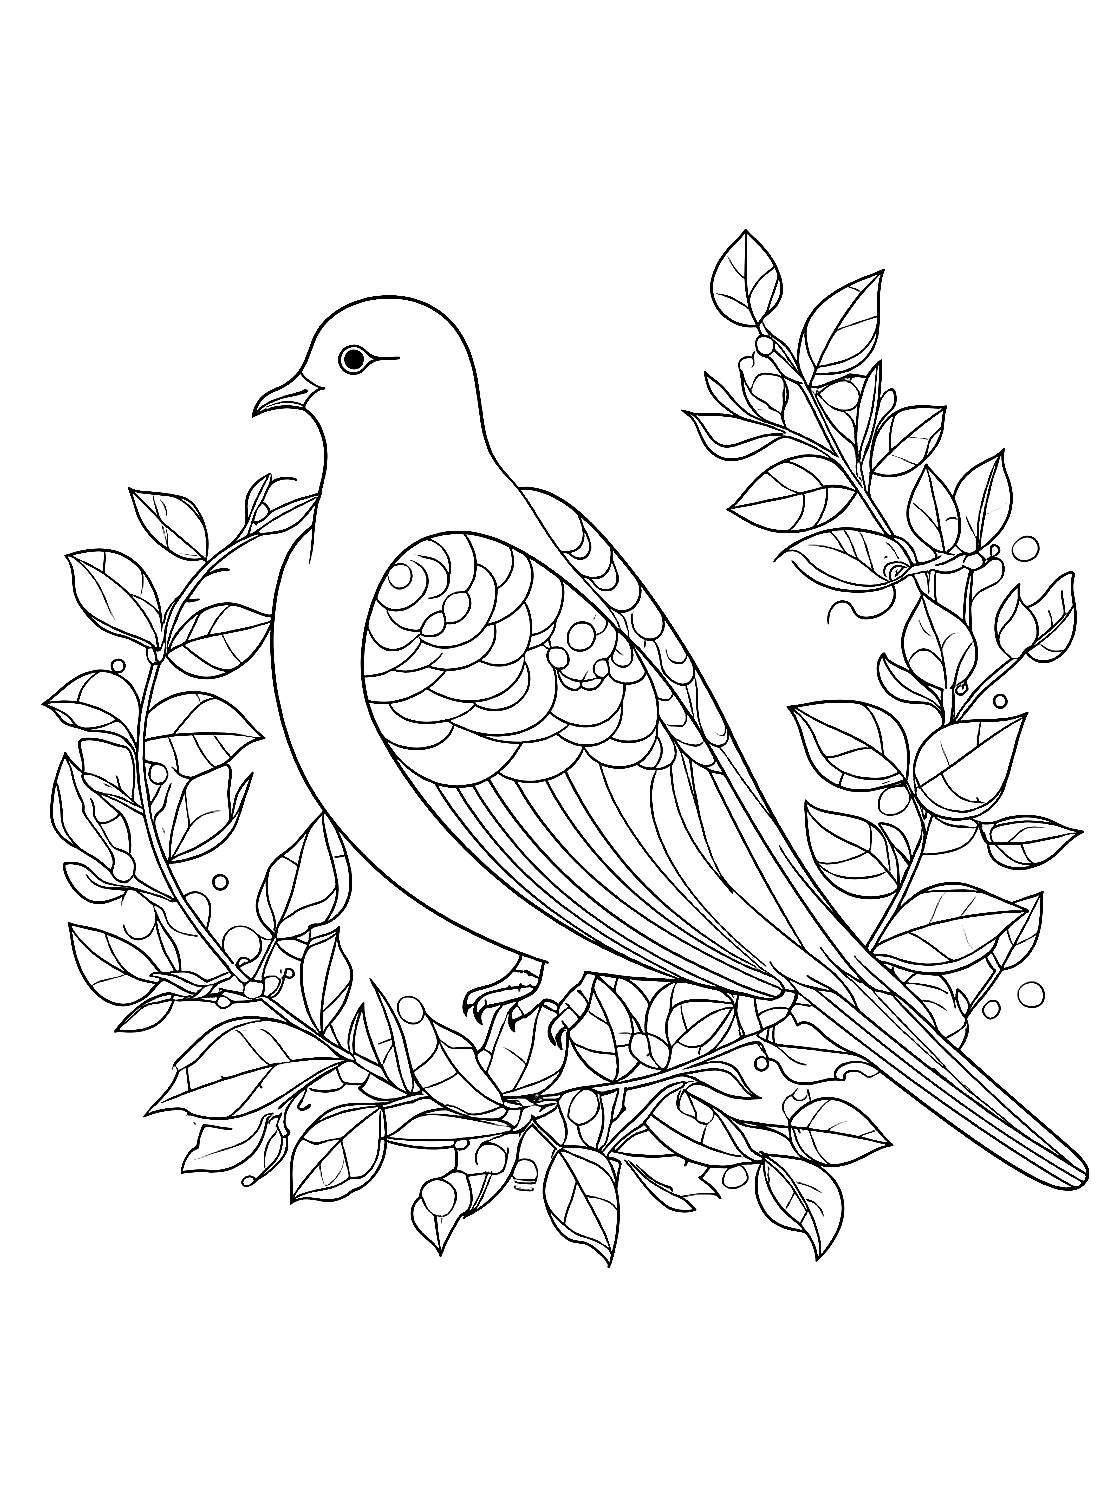 La jolie colombe de Doves